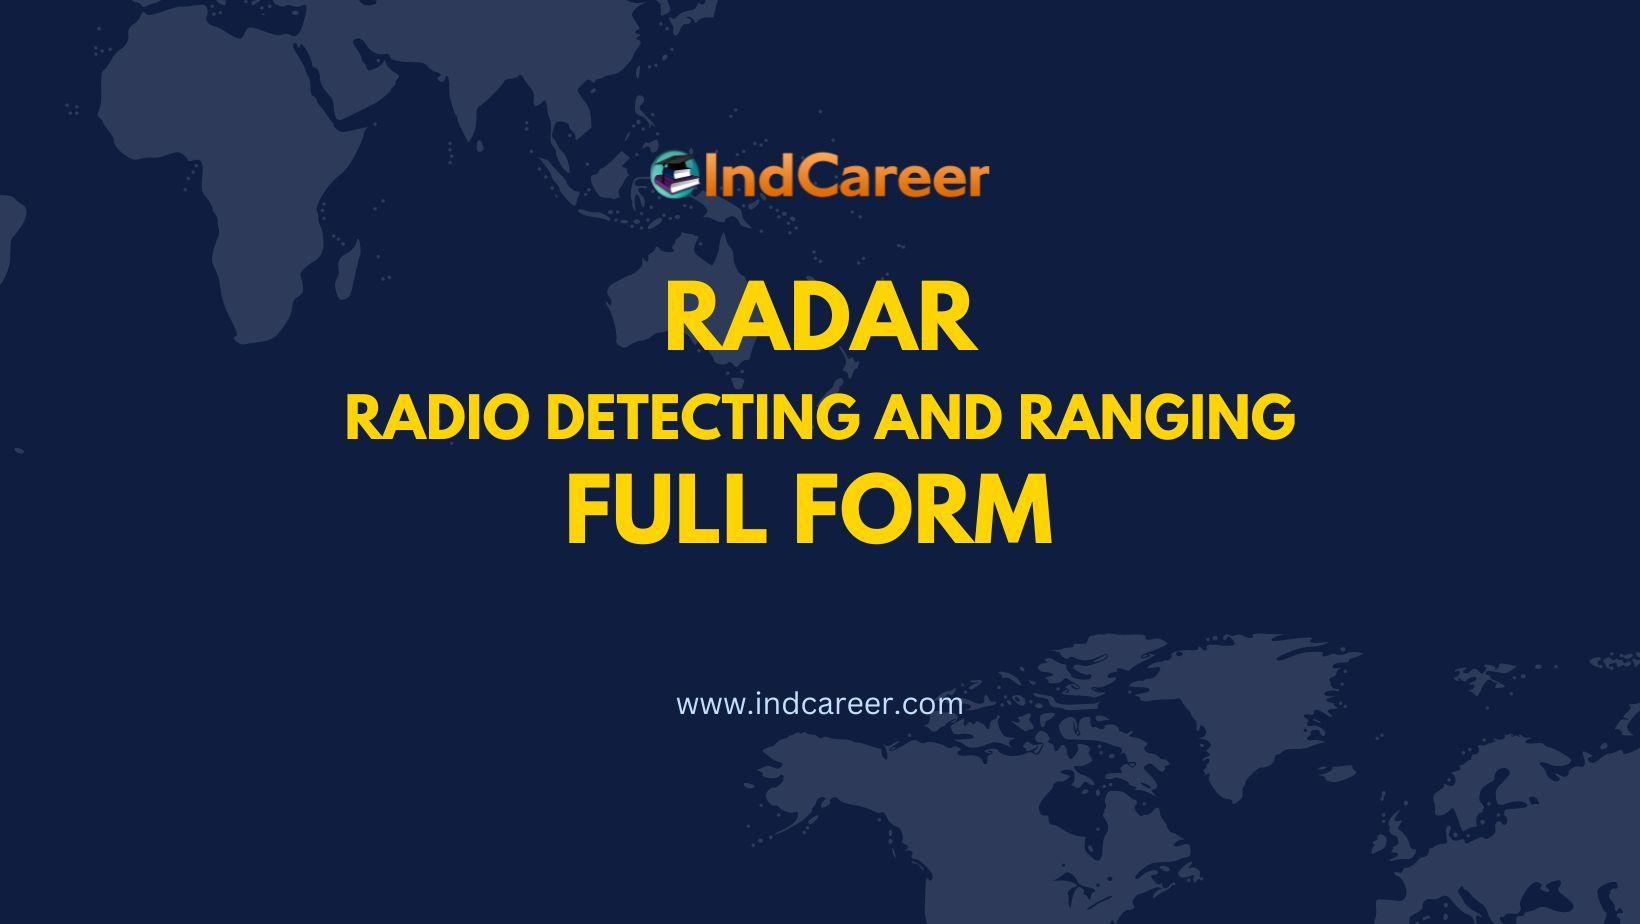 RADAR Full Form What is the Full Form of RADAR? IndCareer